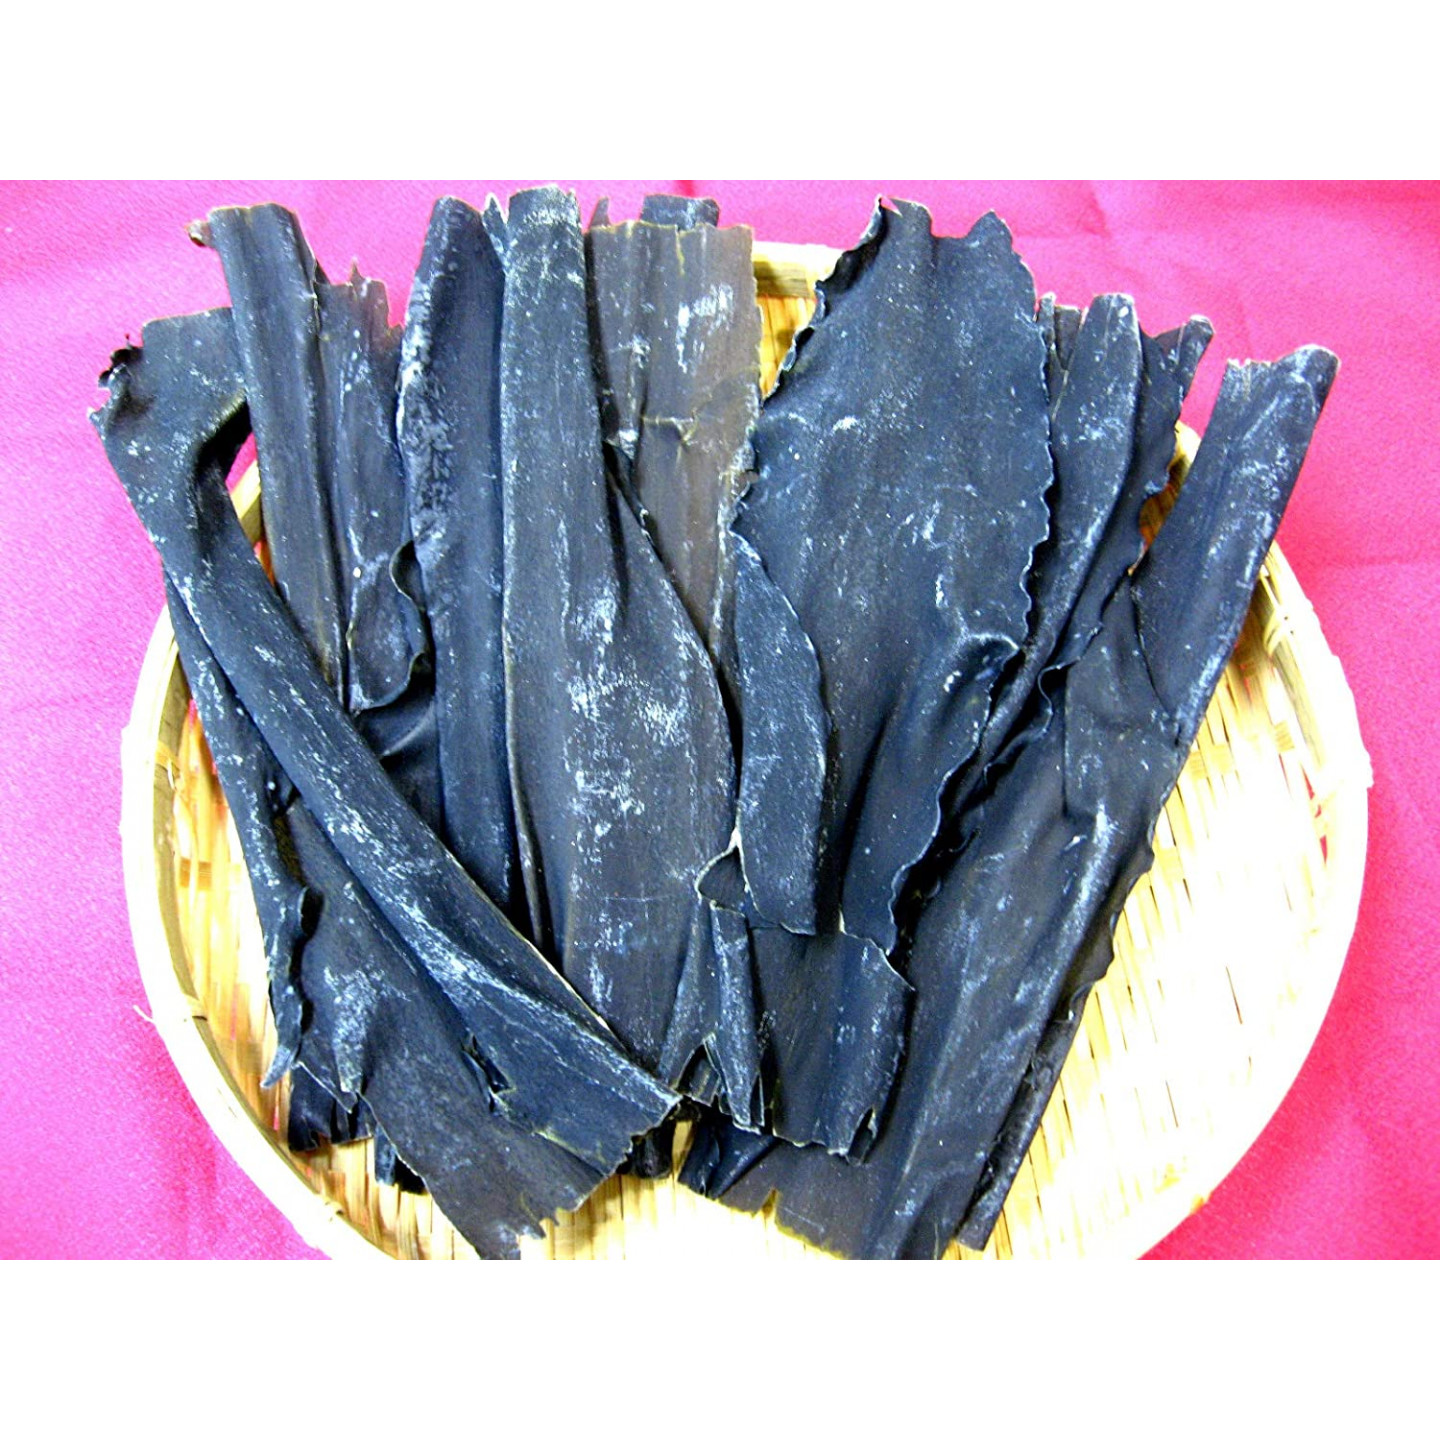 NISHIBE NORI - Yakinori en lamelles (algues nori grillées)